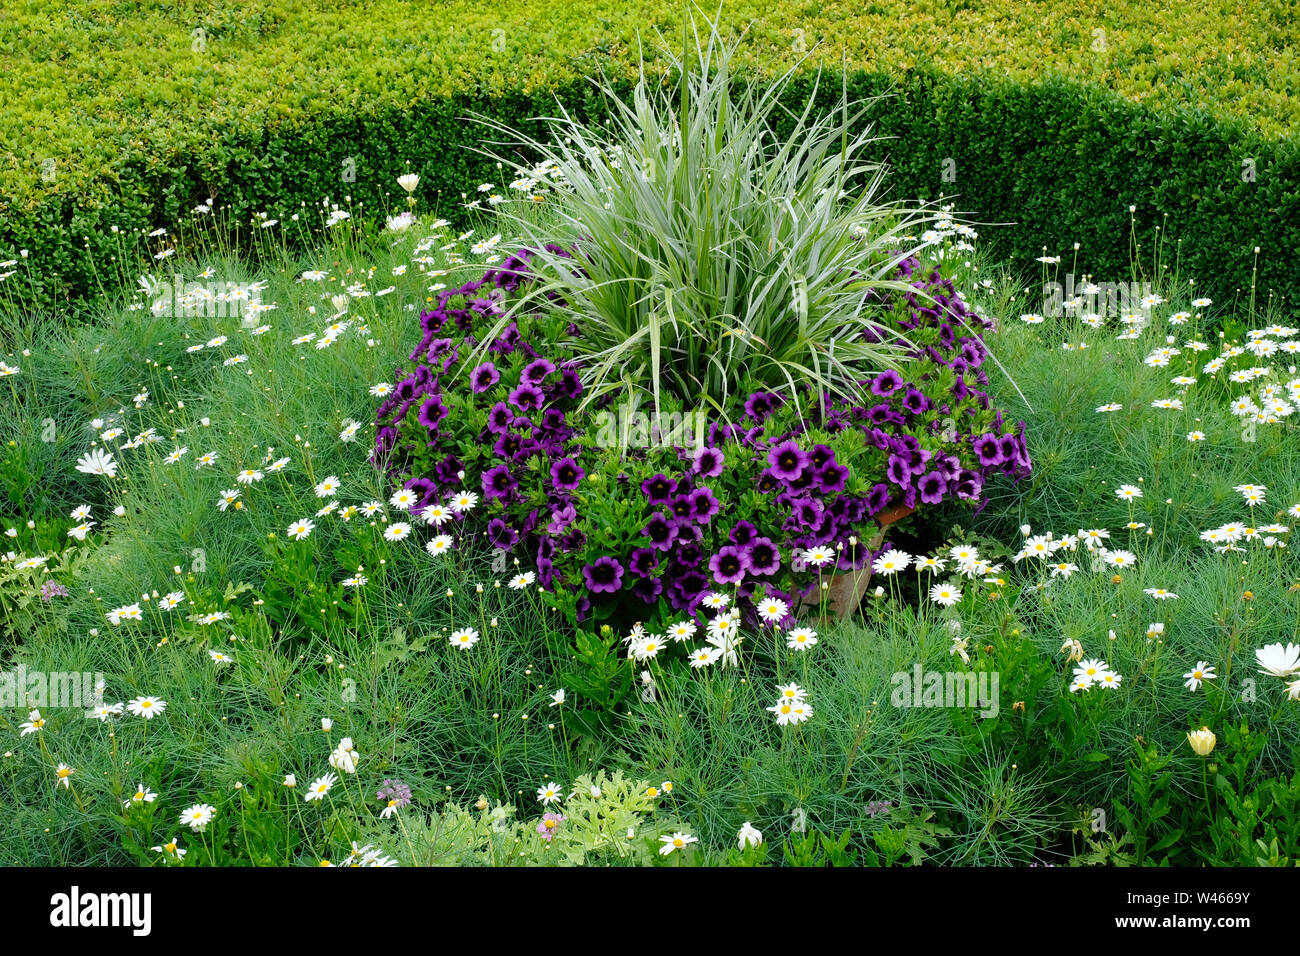 Ornamental flower garden with petunias and daisies - John Gollop Stock Photo